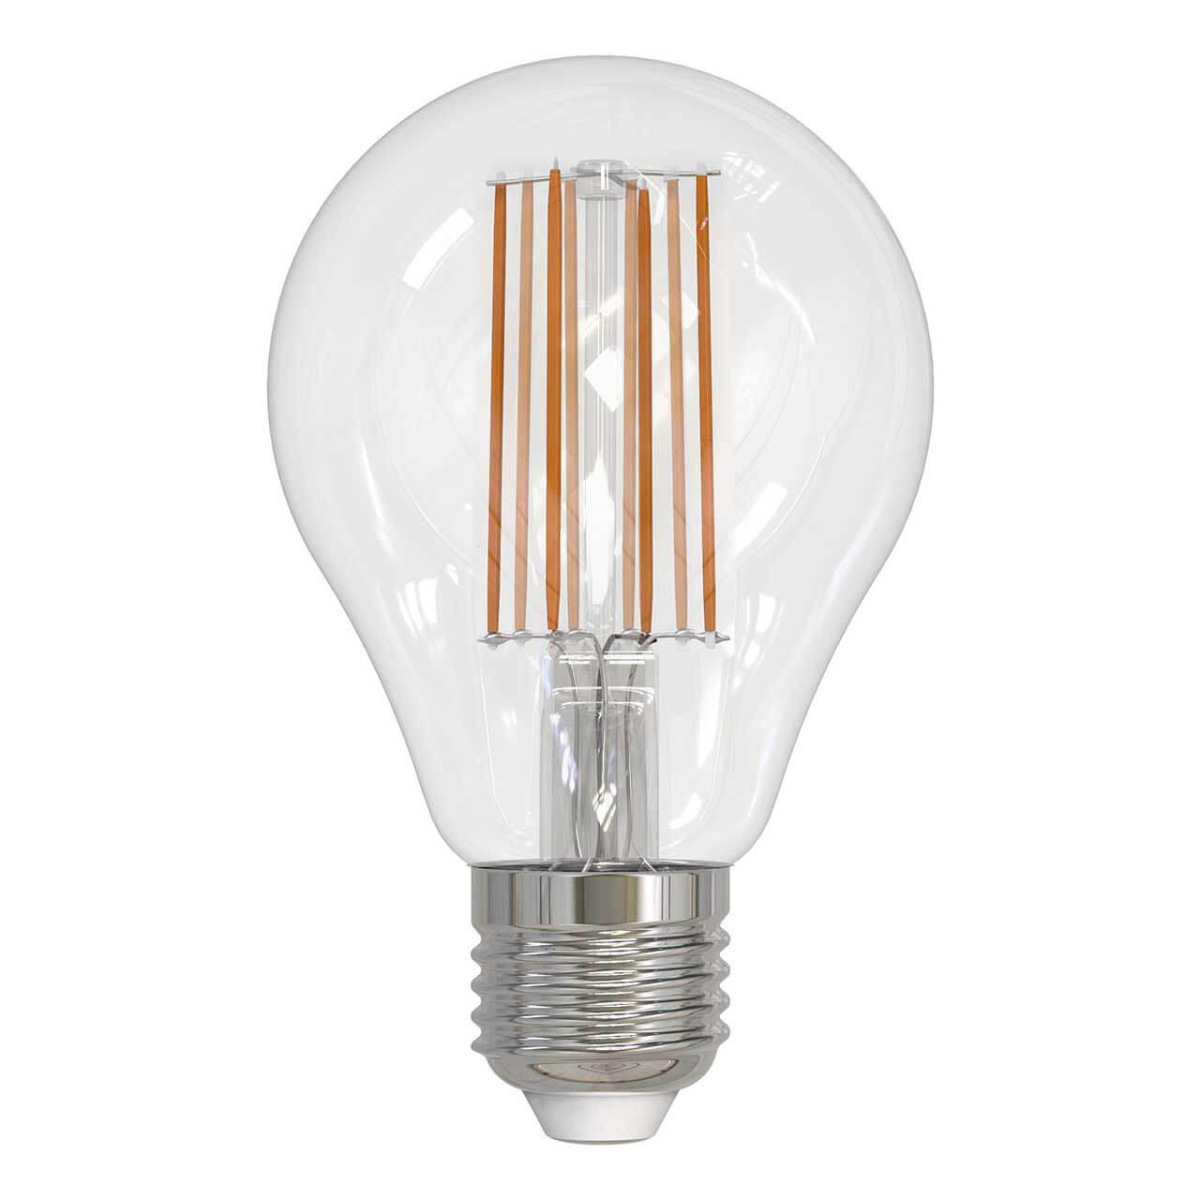 Лампа светодиодная филаментная Uniel E27 17W 3000K прозрачная LED-A70-17W/3000K/E27/CL PLS02WH UL-00004870 